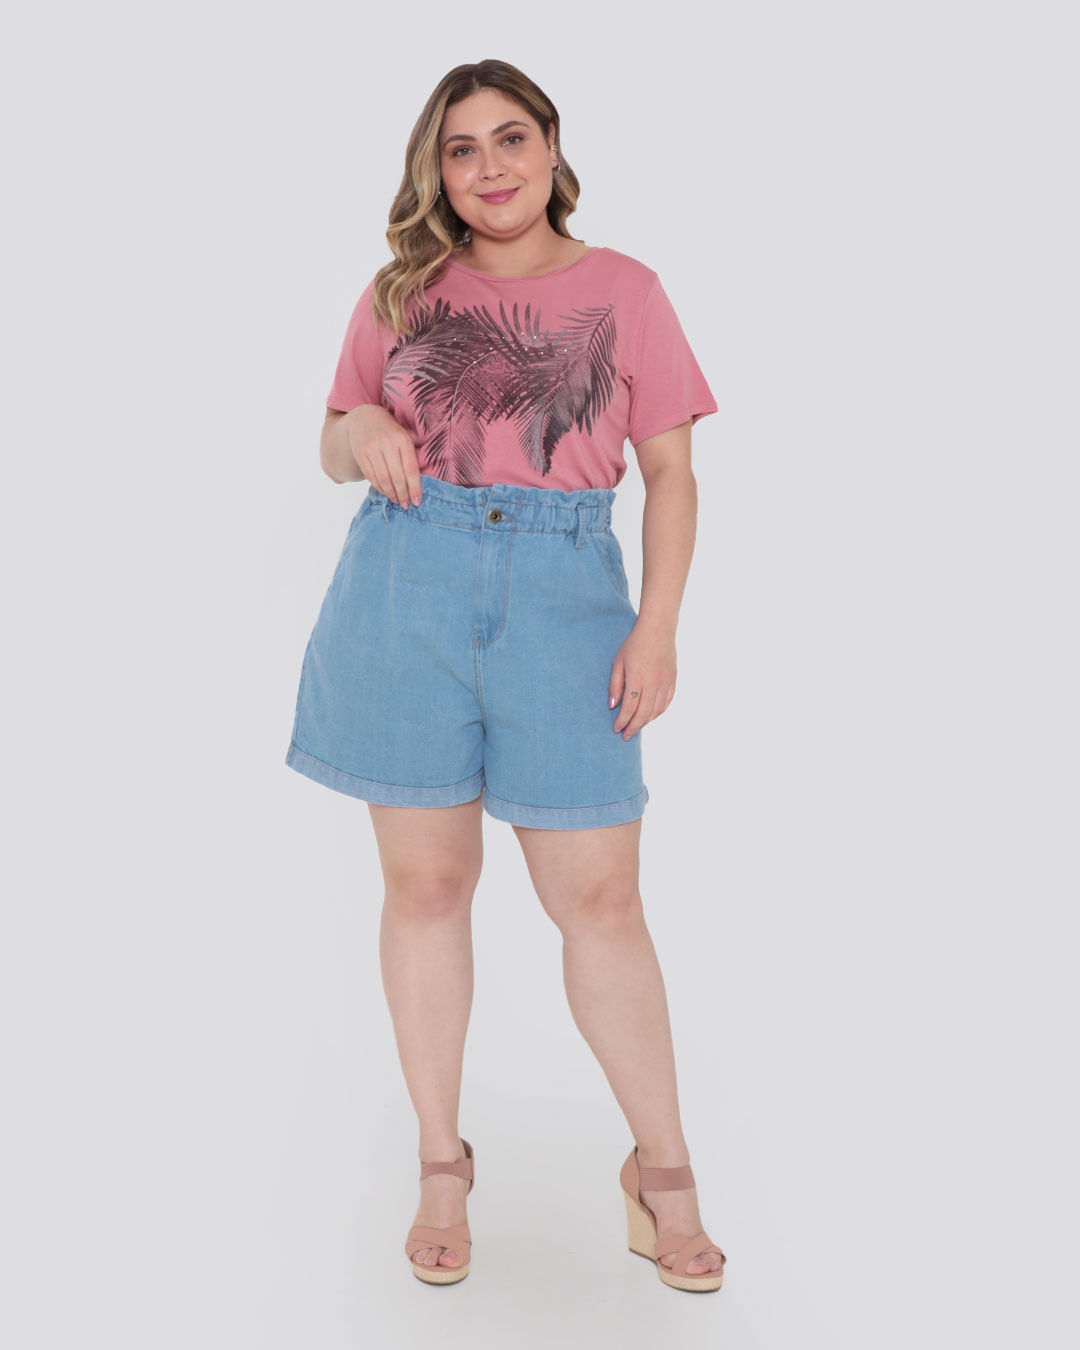 Blusa Feminina Plus Size Mullet Strass Folhagem Rosa